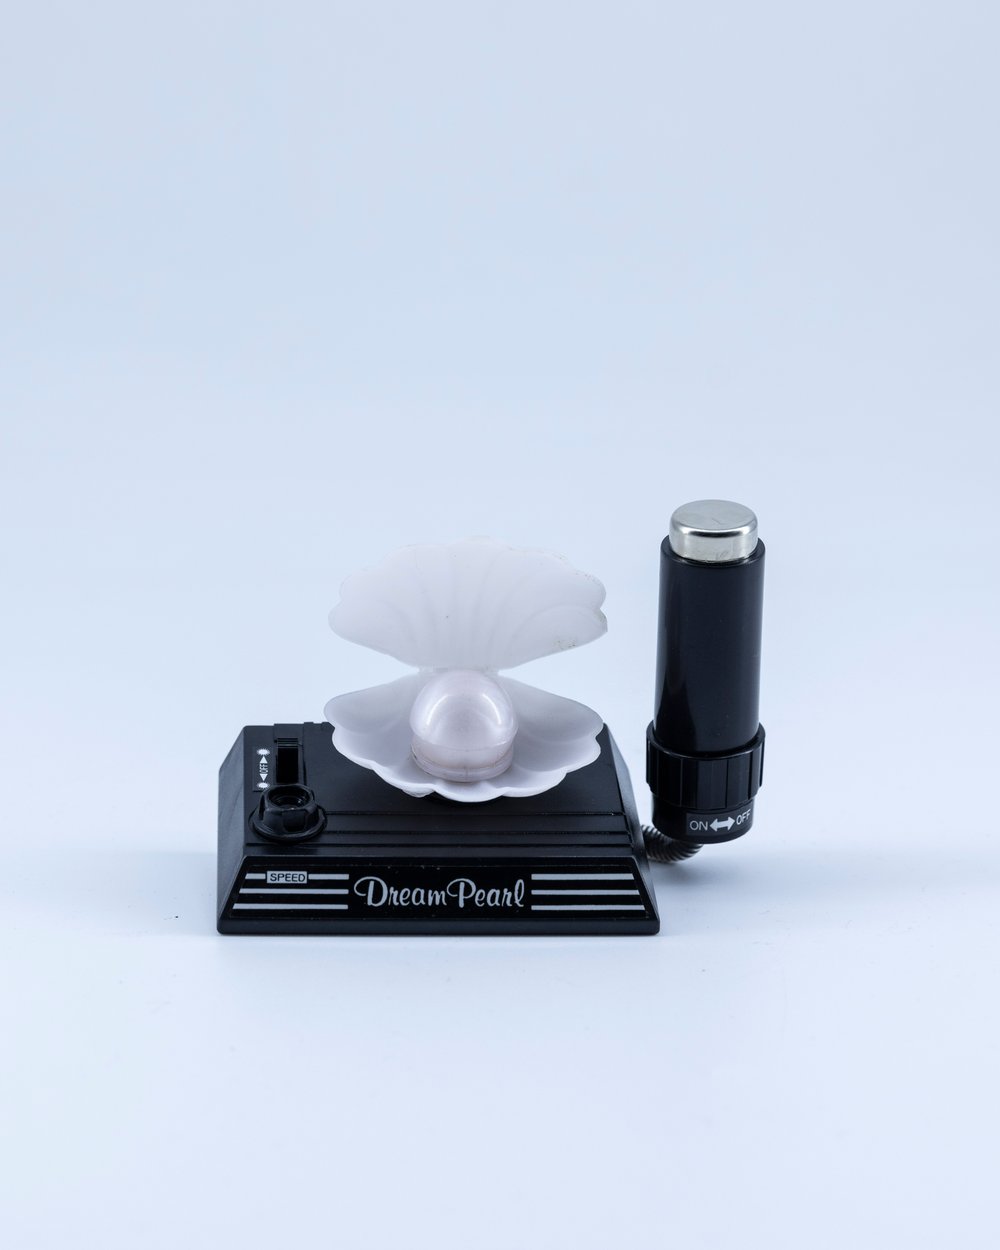 Dream Pearl Ash Tray Light (12V)